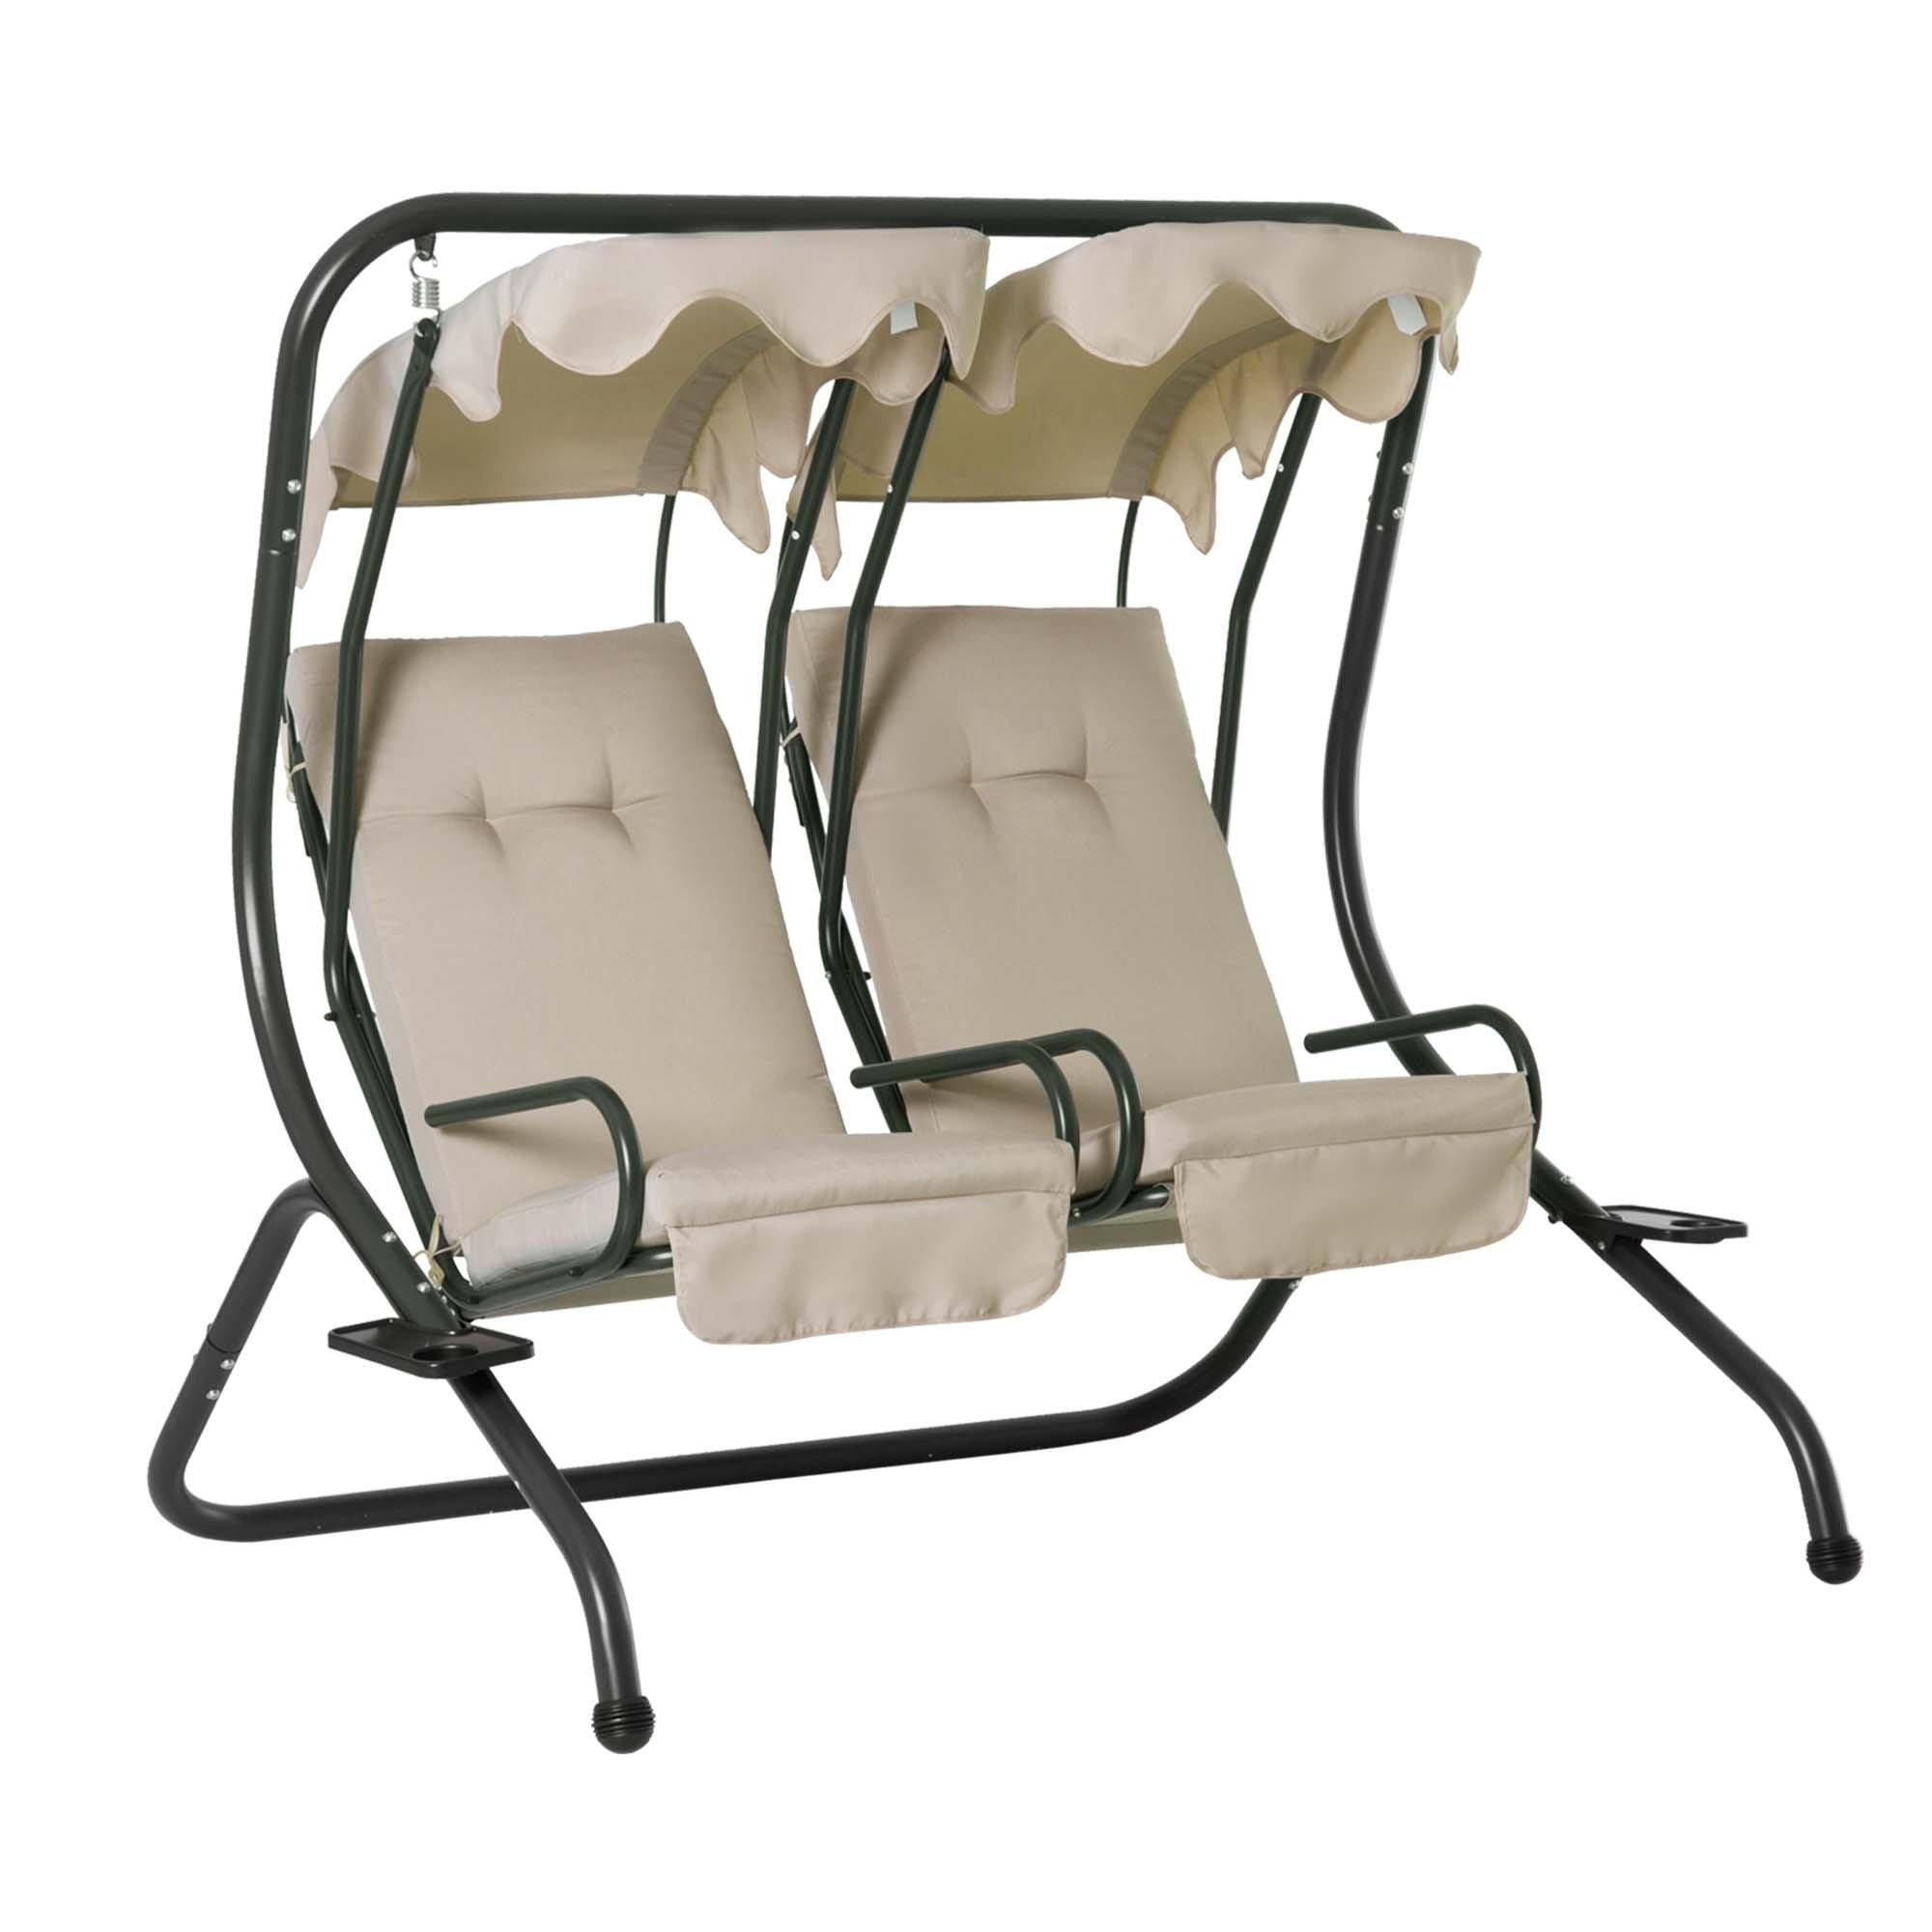 2 Seater Garden Metal Swing Seat Patio Swinging Chair Hammock Canopy - image 1